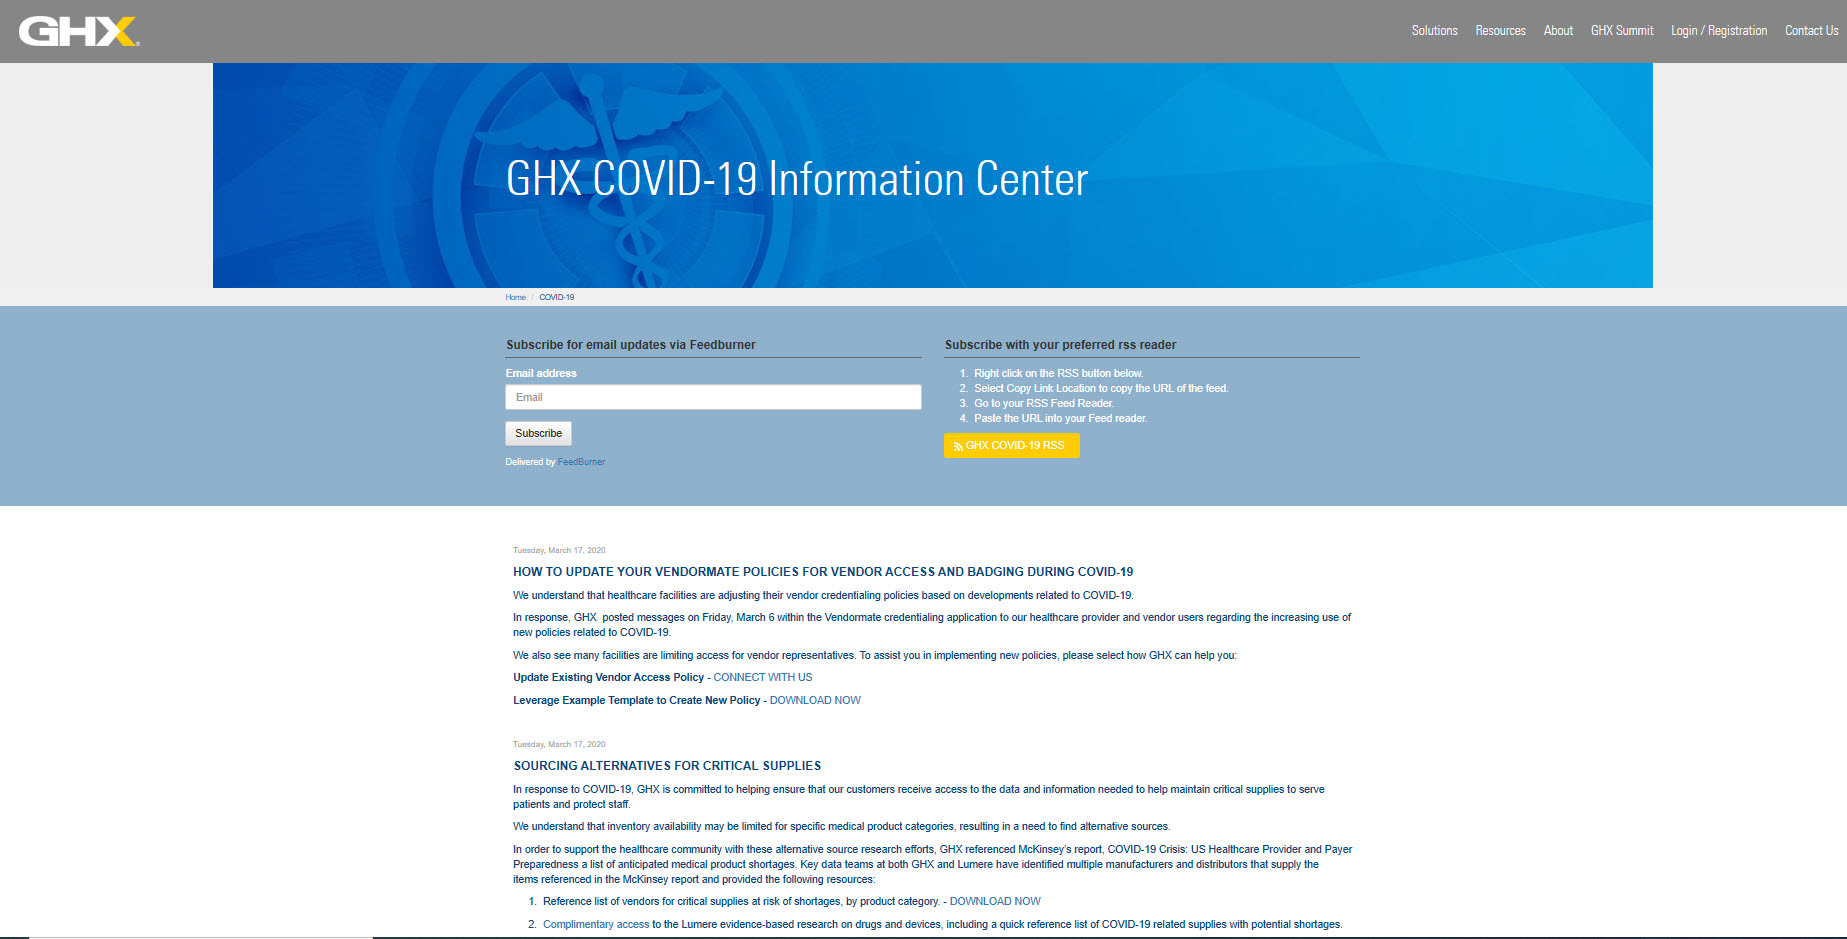 GHX COVID-19 Information Center